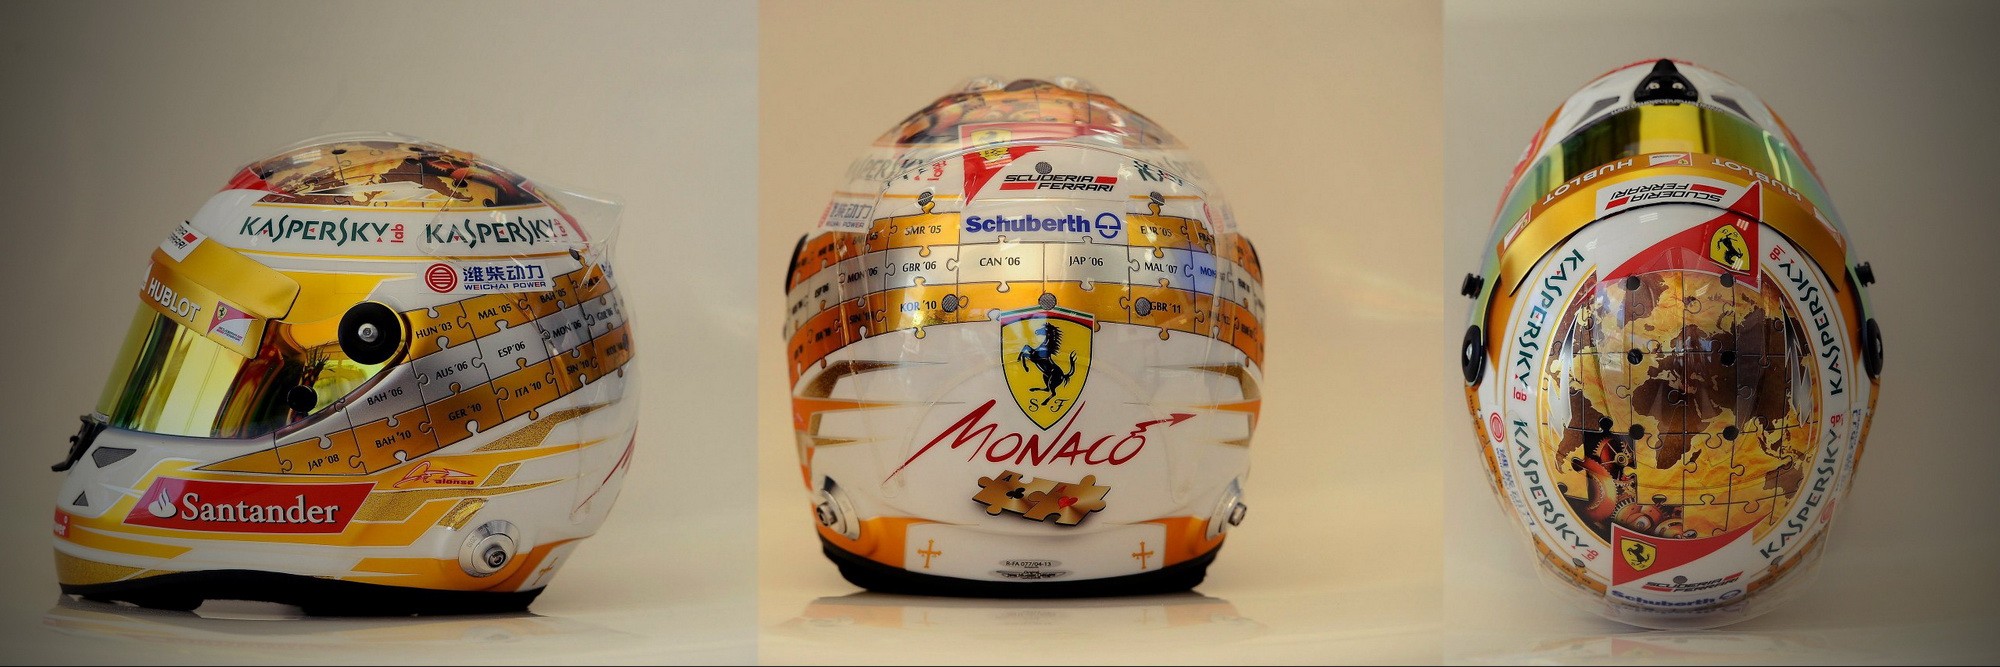 Шлем Фернандо Алонсо на Гран-При Монако 2013 | 2013 Monaco Grand Prix helmet of Fernando Alonso